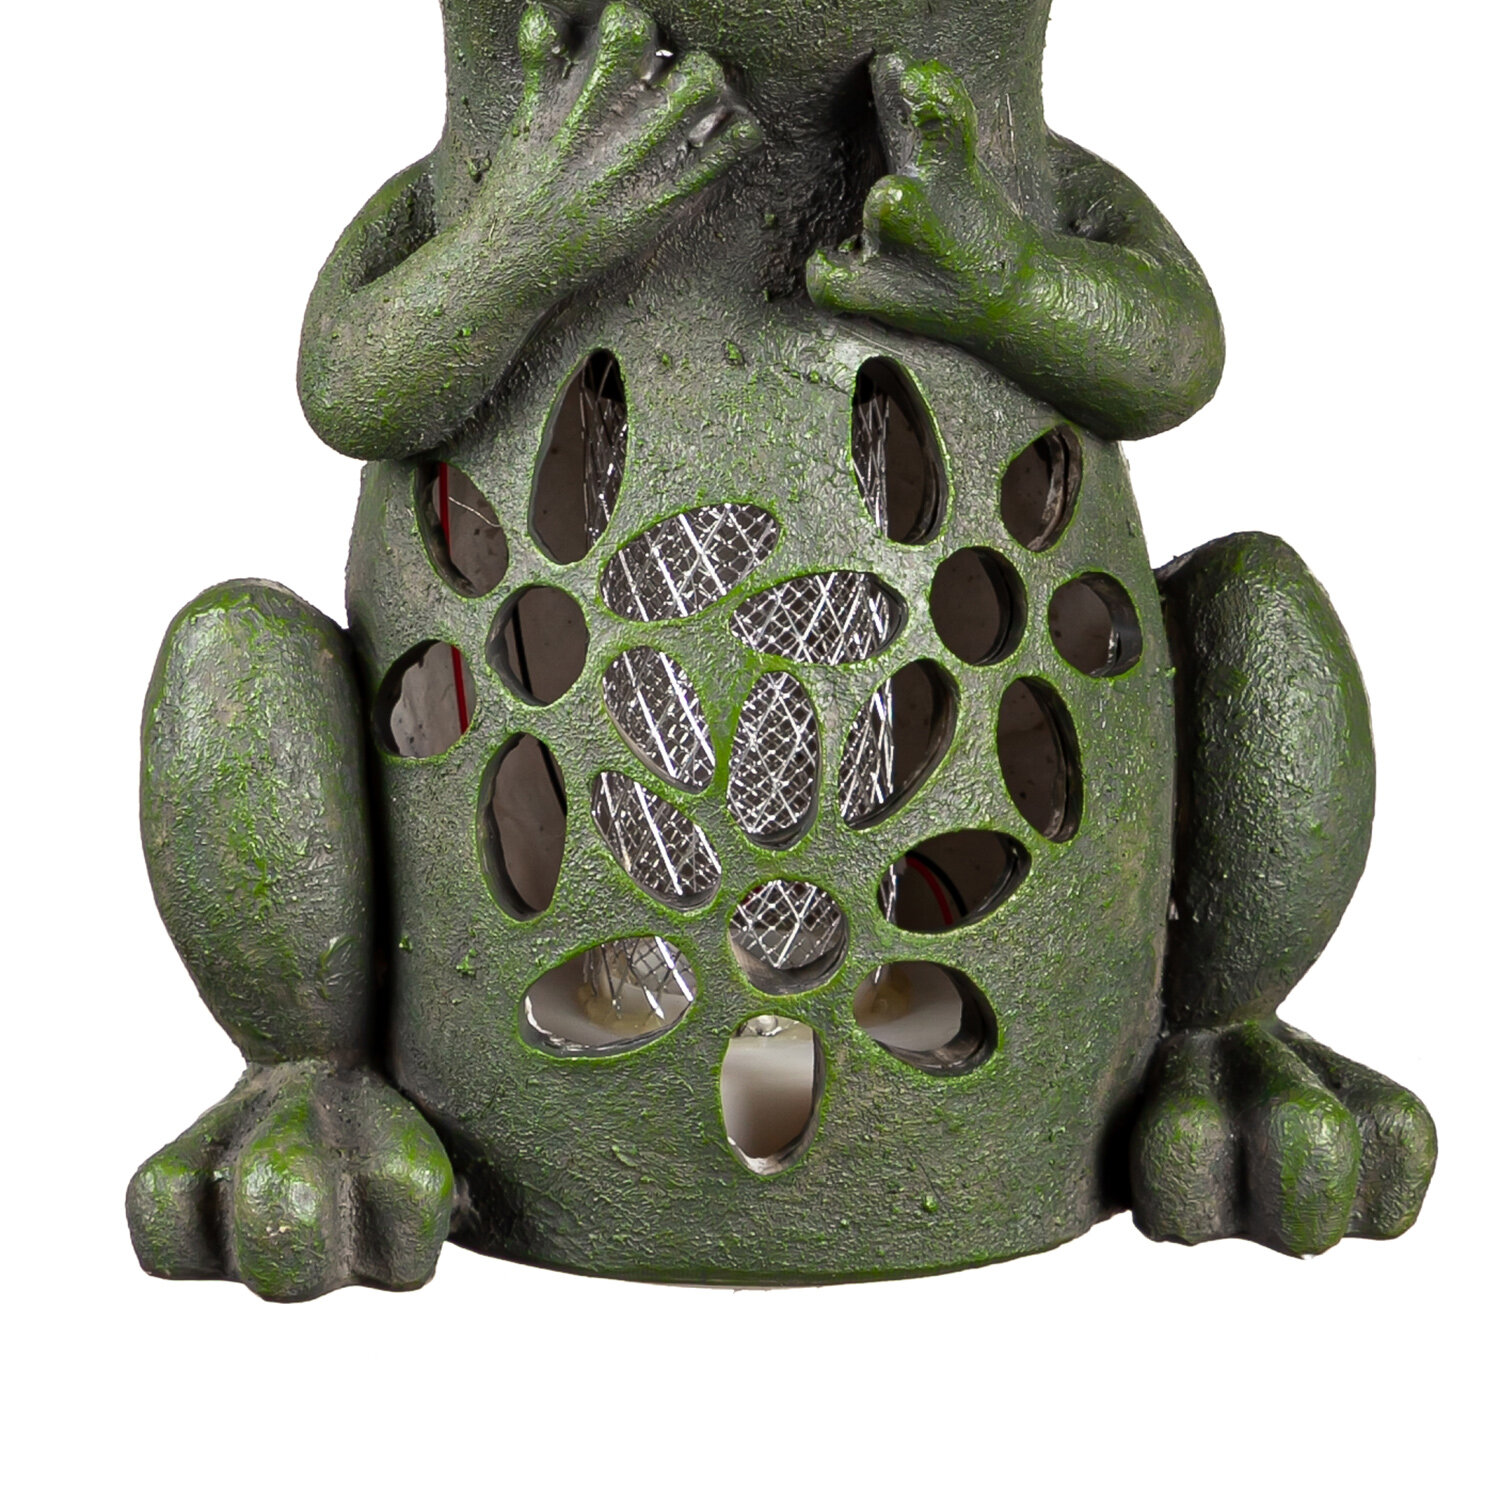 Trinx Analya Frog Garden Statuary Wayfair 6401